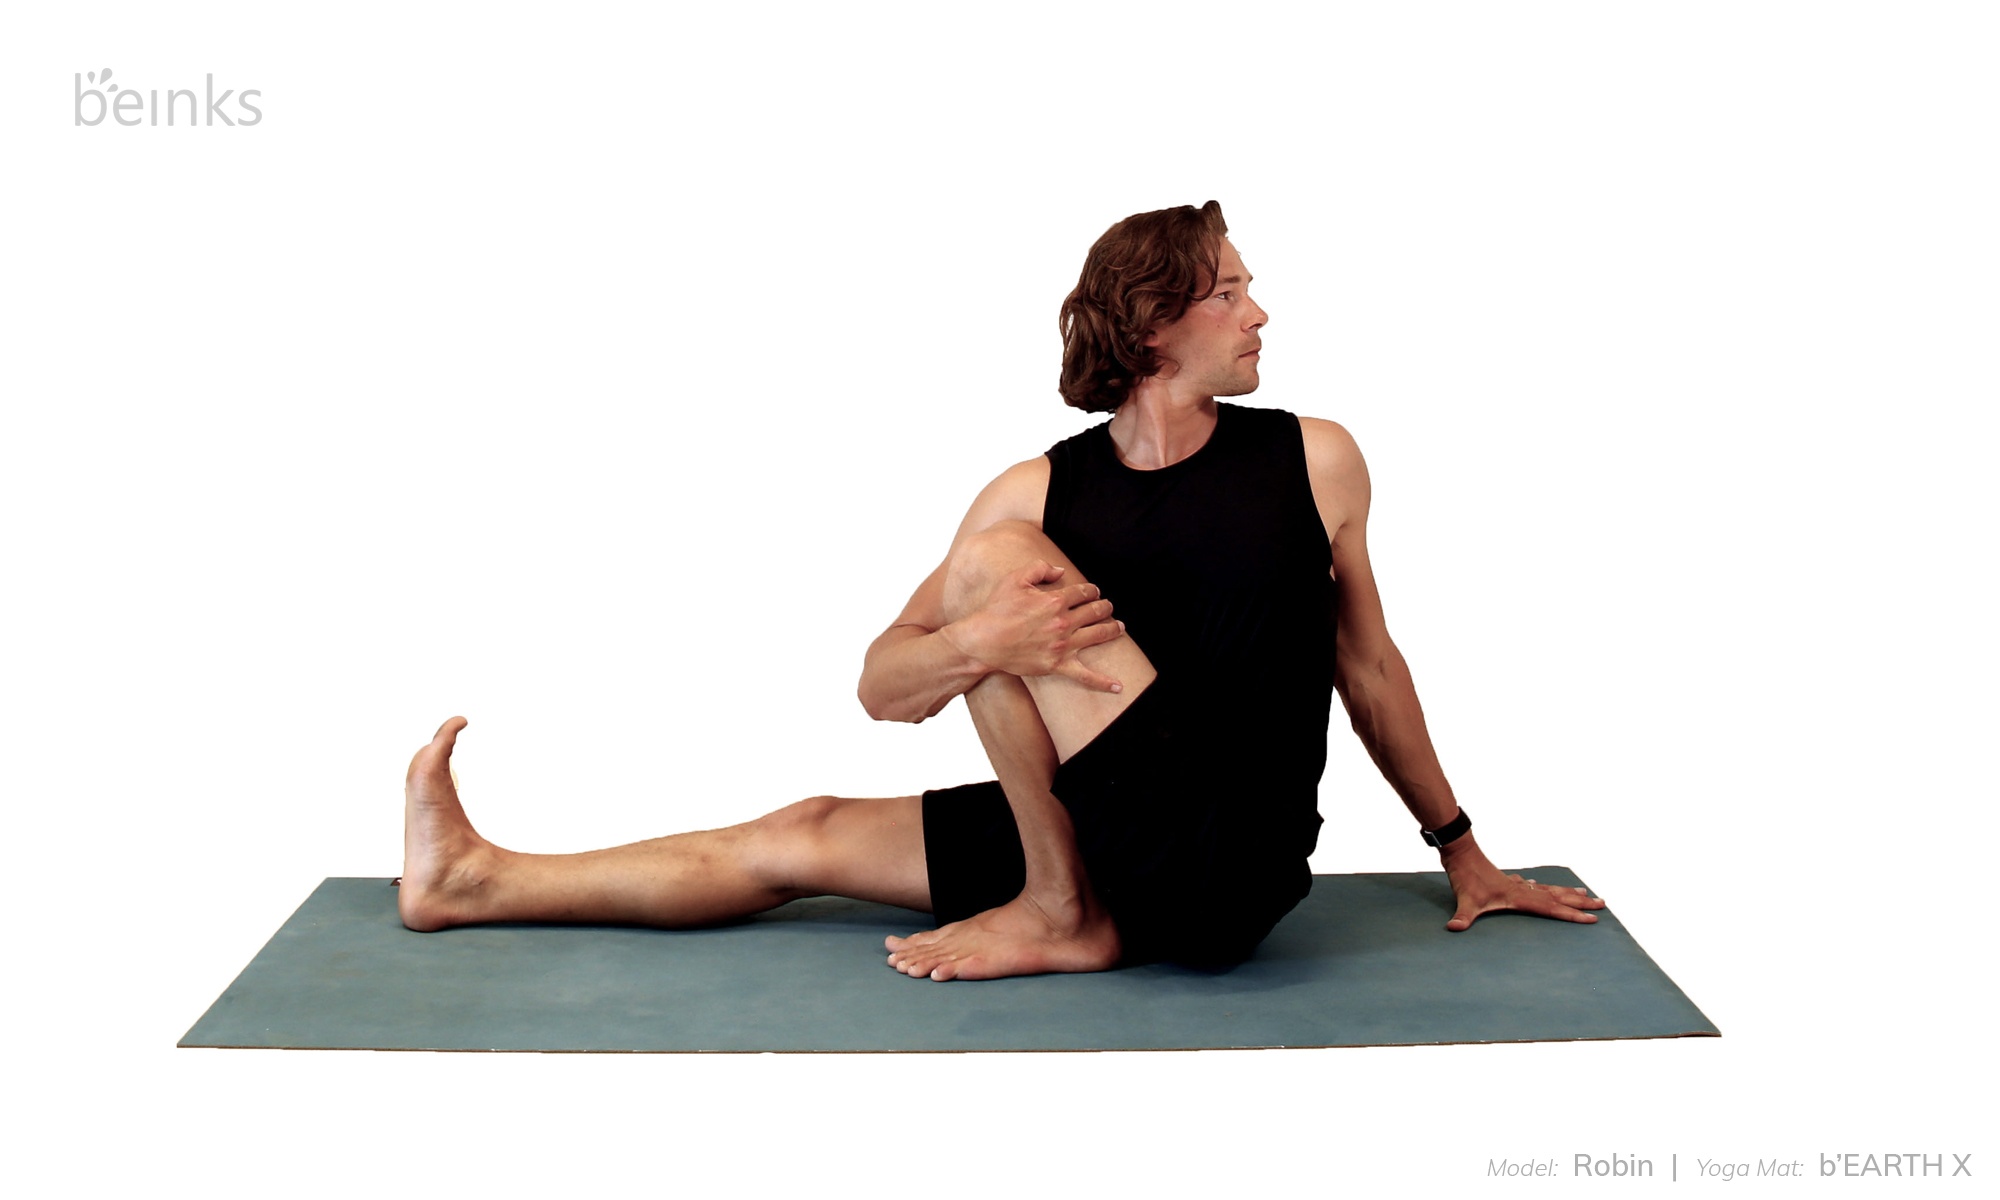 Man doing yoga asana, saga twist pose or marichyasana, vector illustration:  Royalty Free #151861730